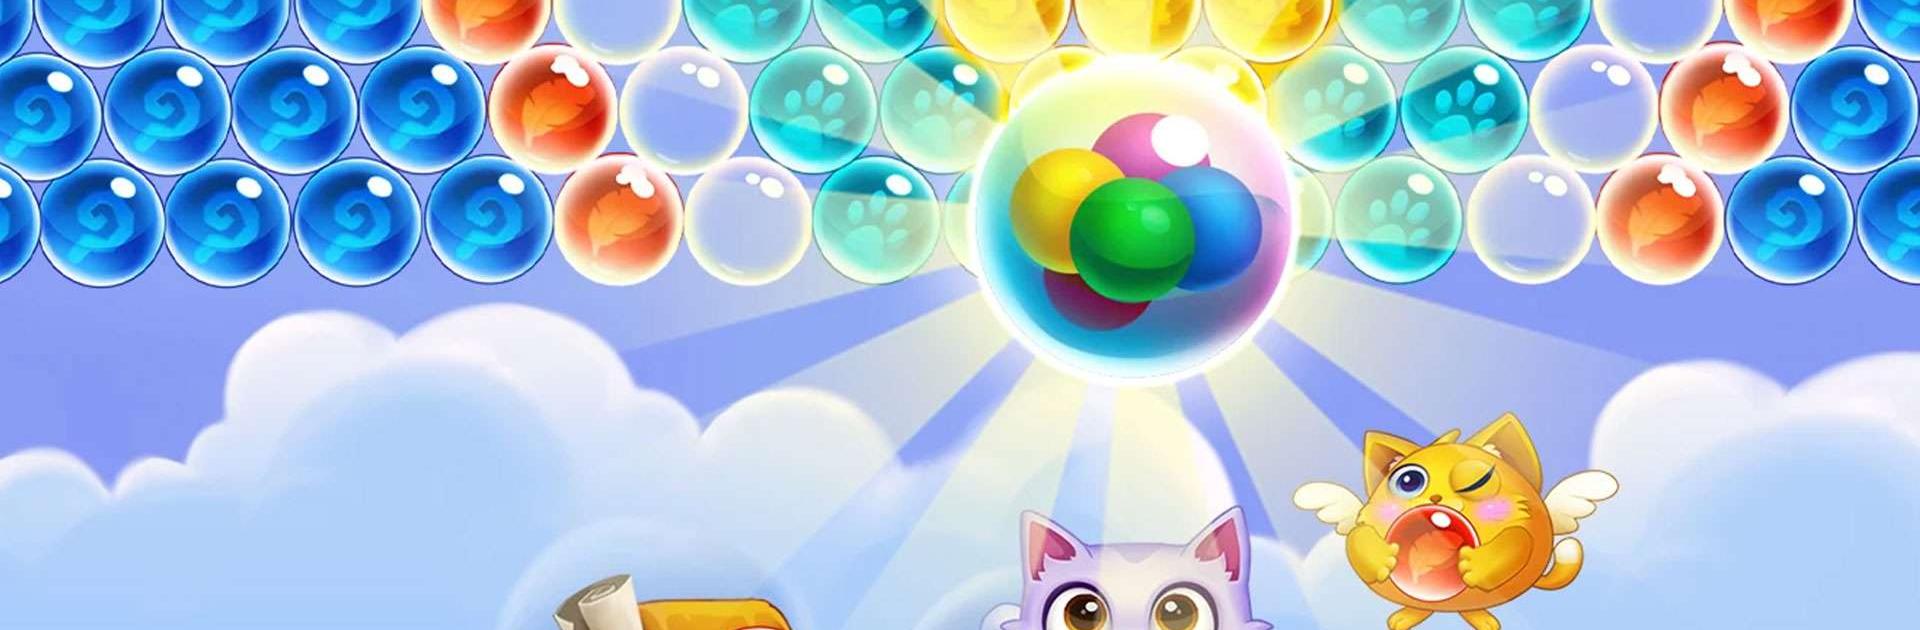 Bubble Shooter: Cat Pop Game